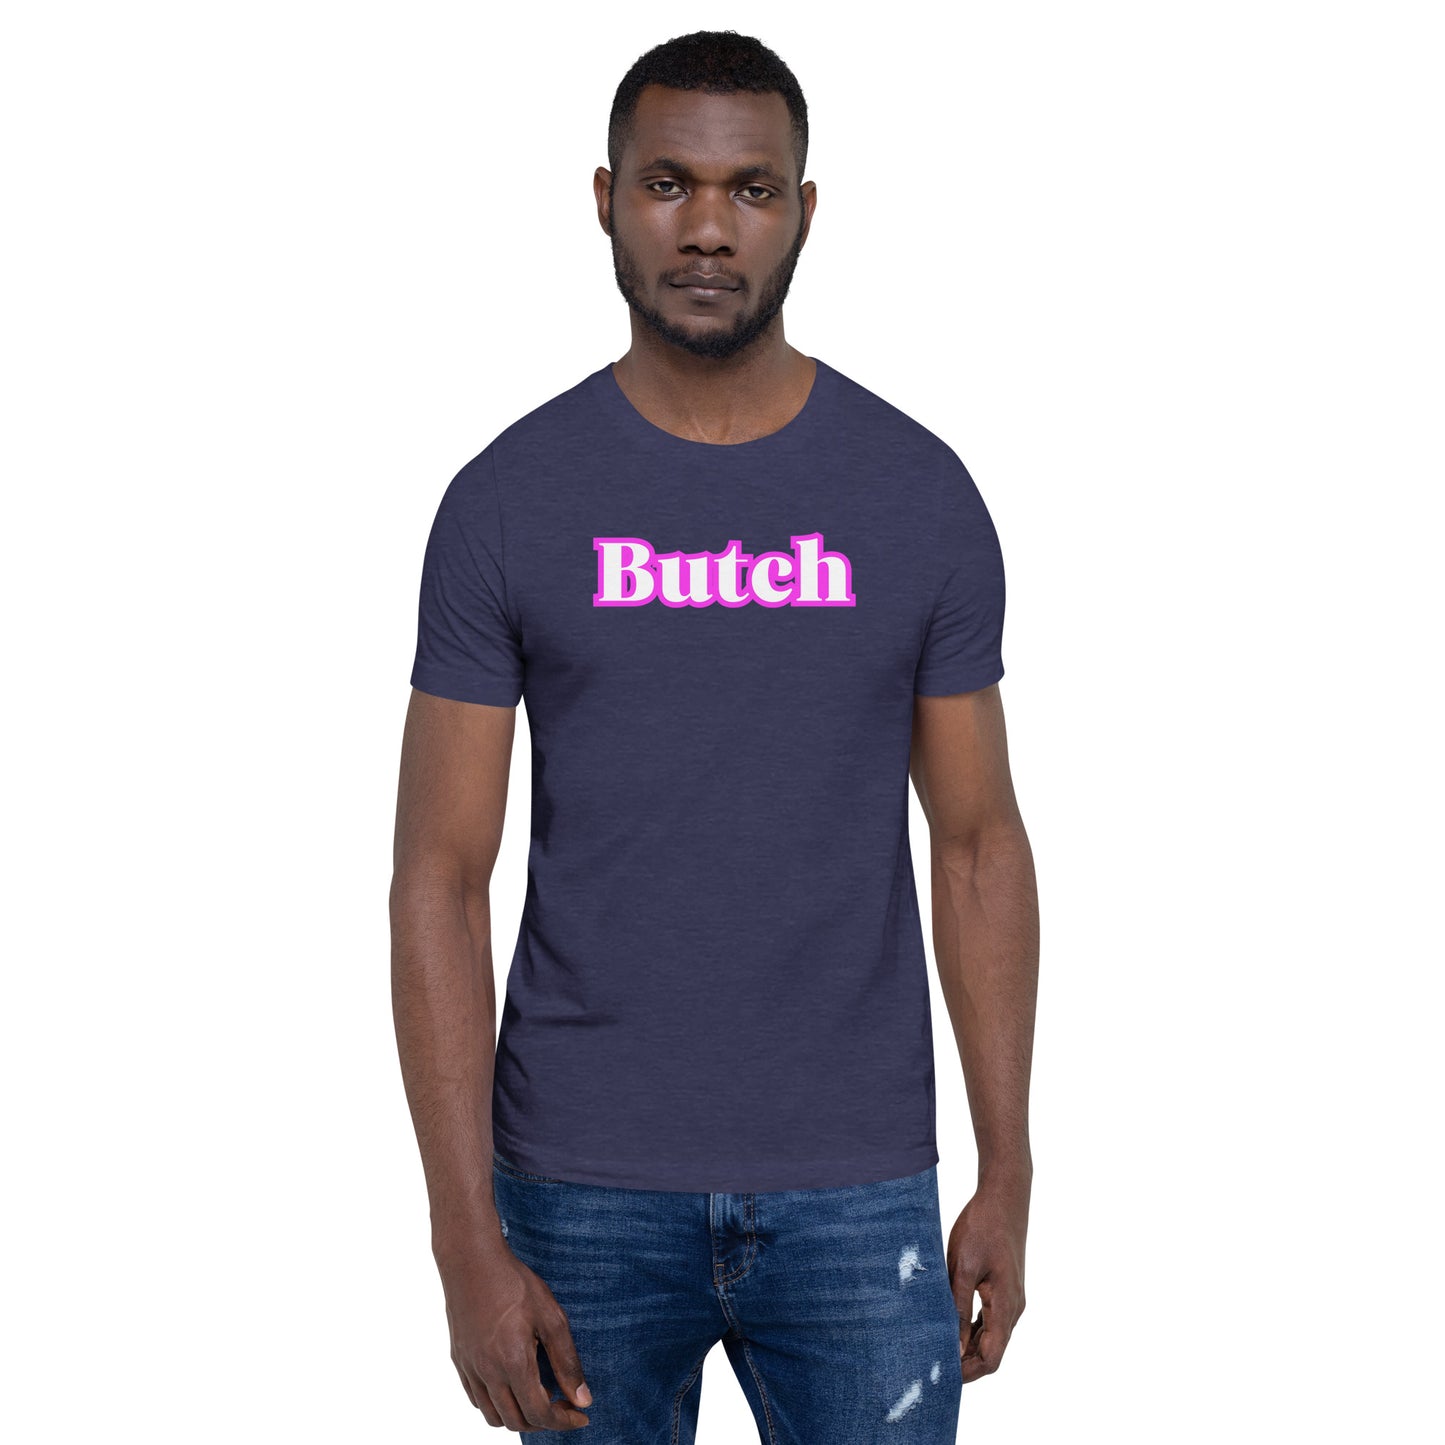 "Butch" Unisex t-shirt